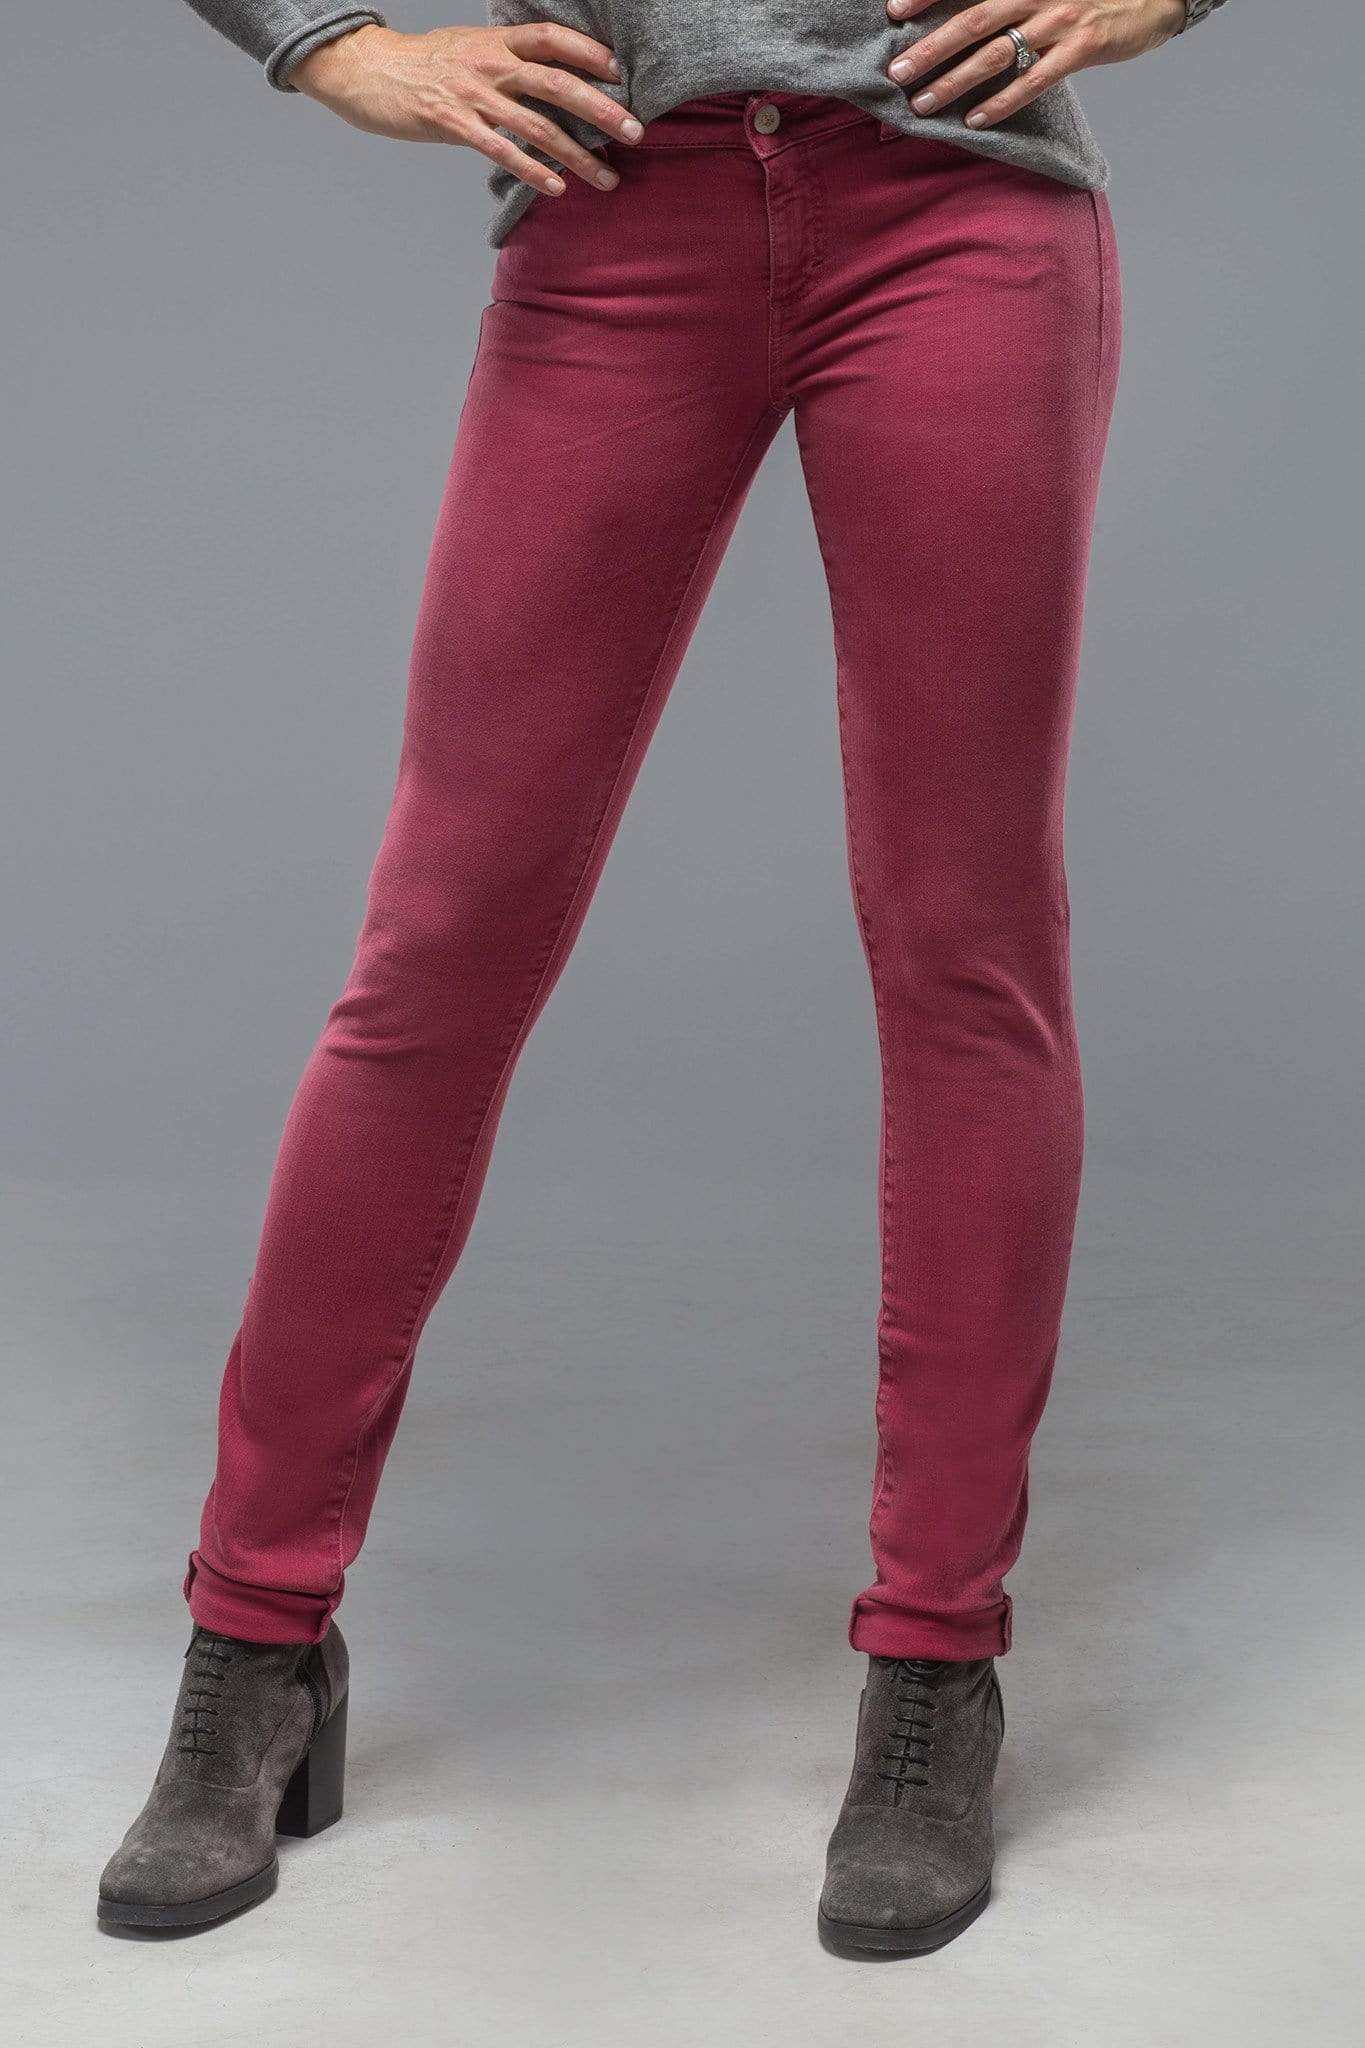 Women's Jeans Jeggings Five Pocket Stretch Denim Pants (Red, Large) 